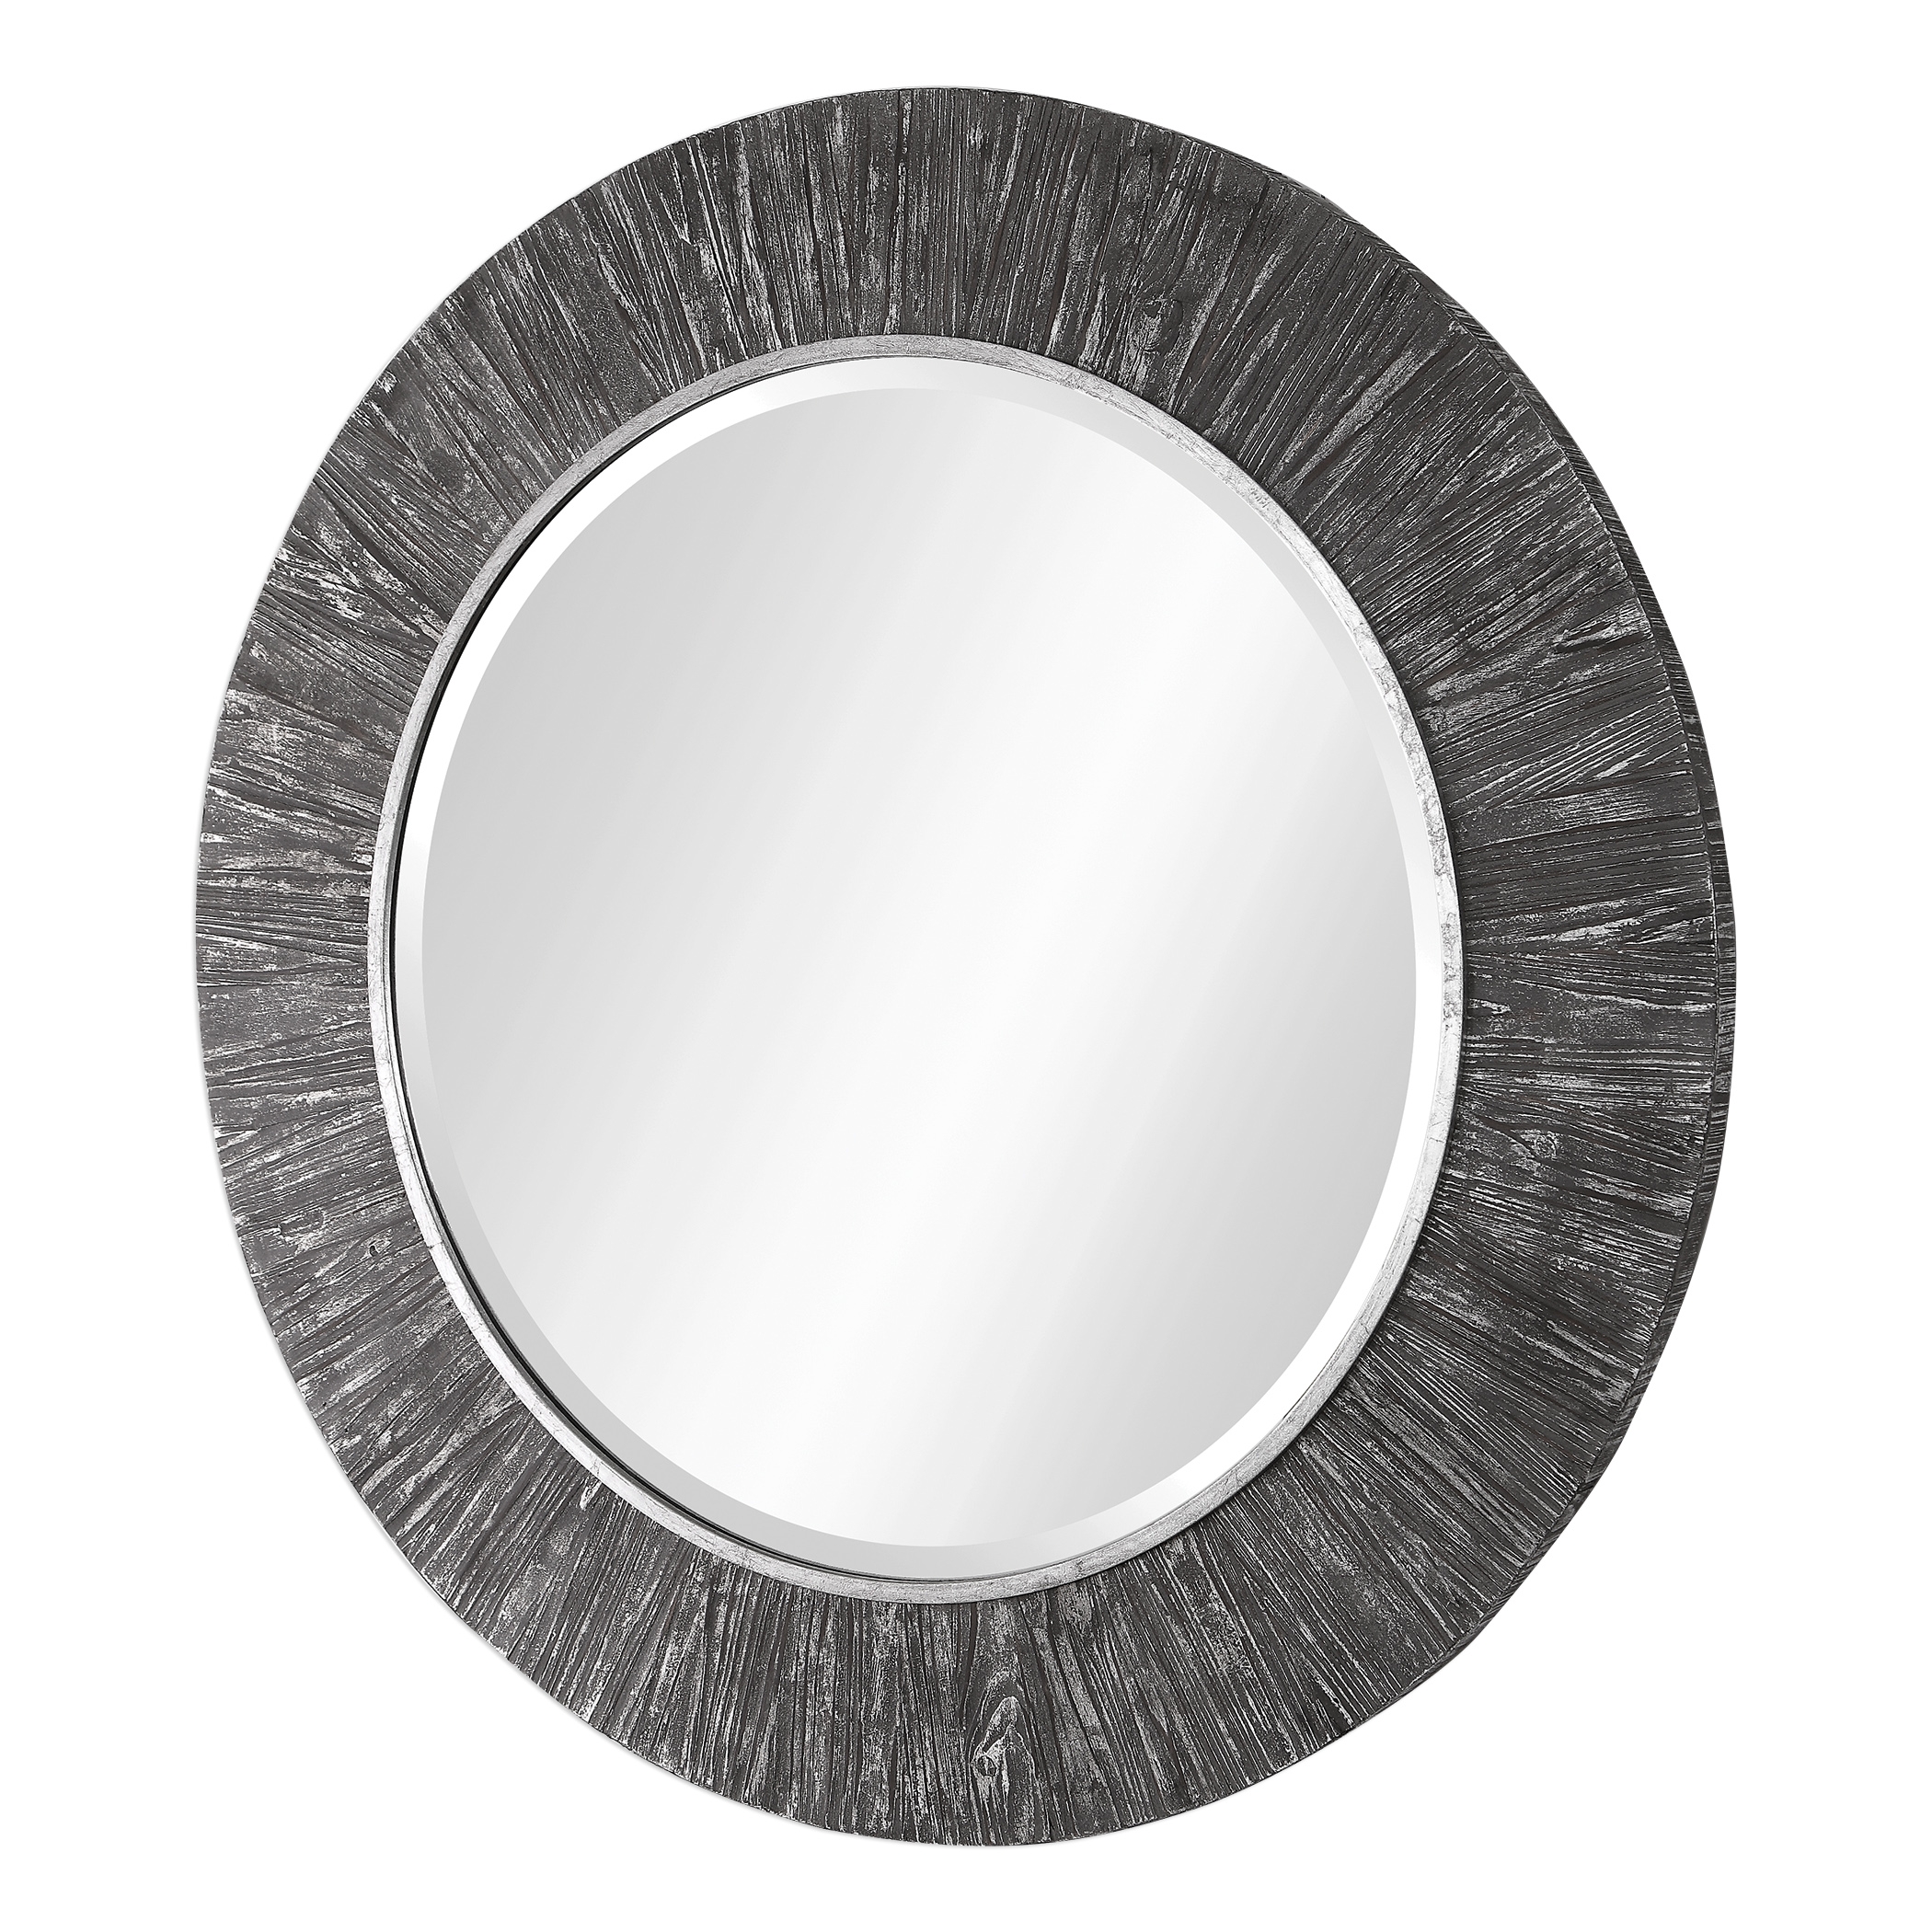 Wenton Round Aged Wood Mirror - Image 3